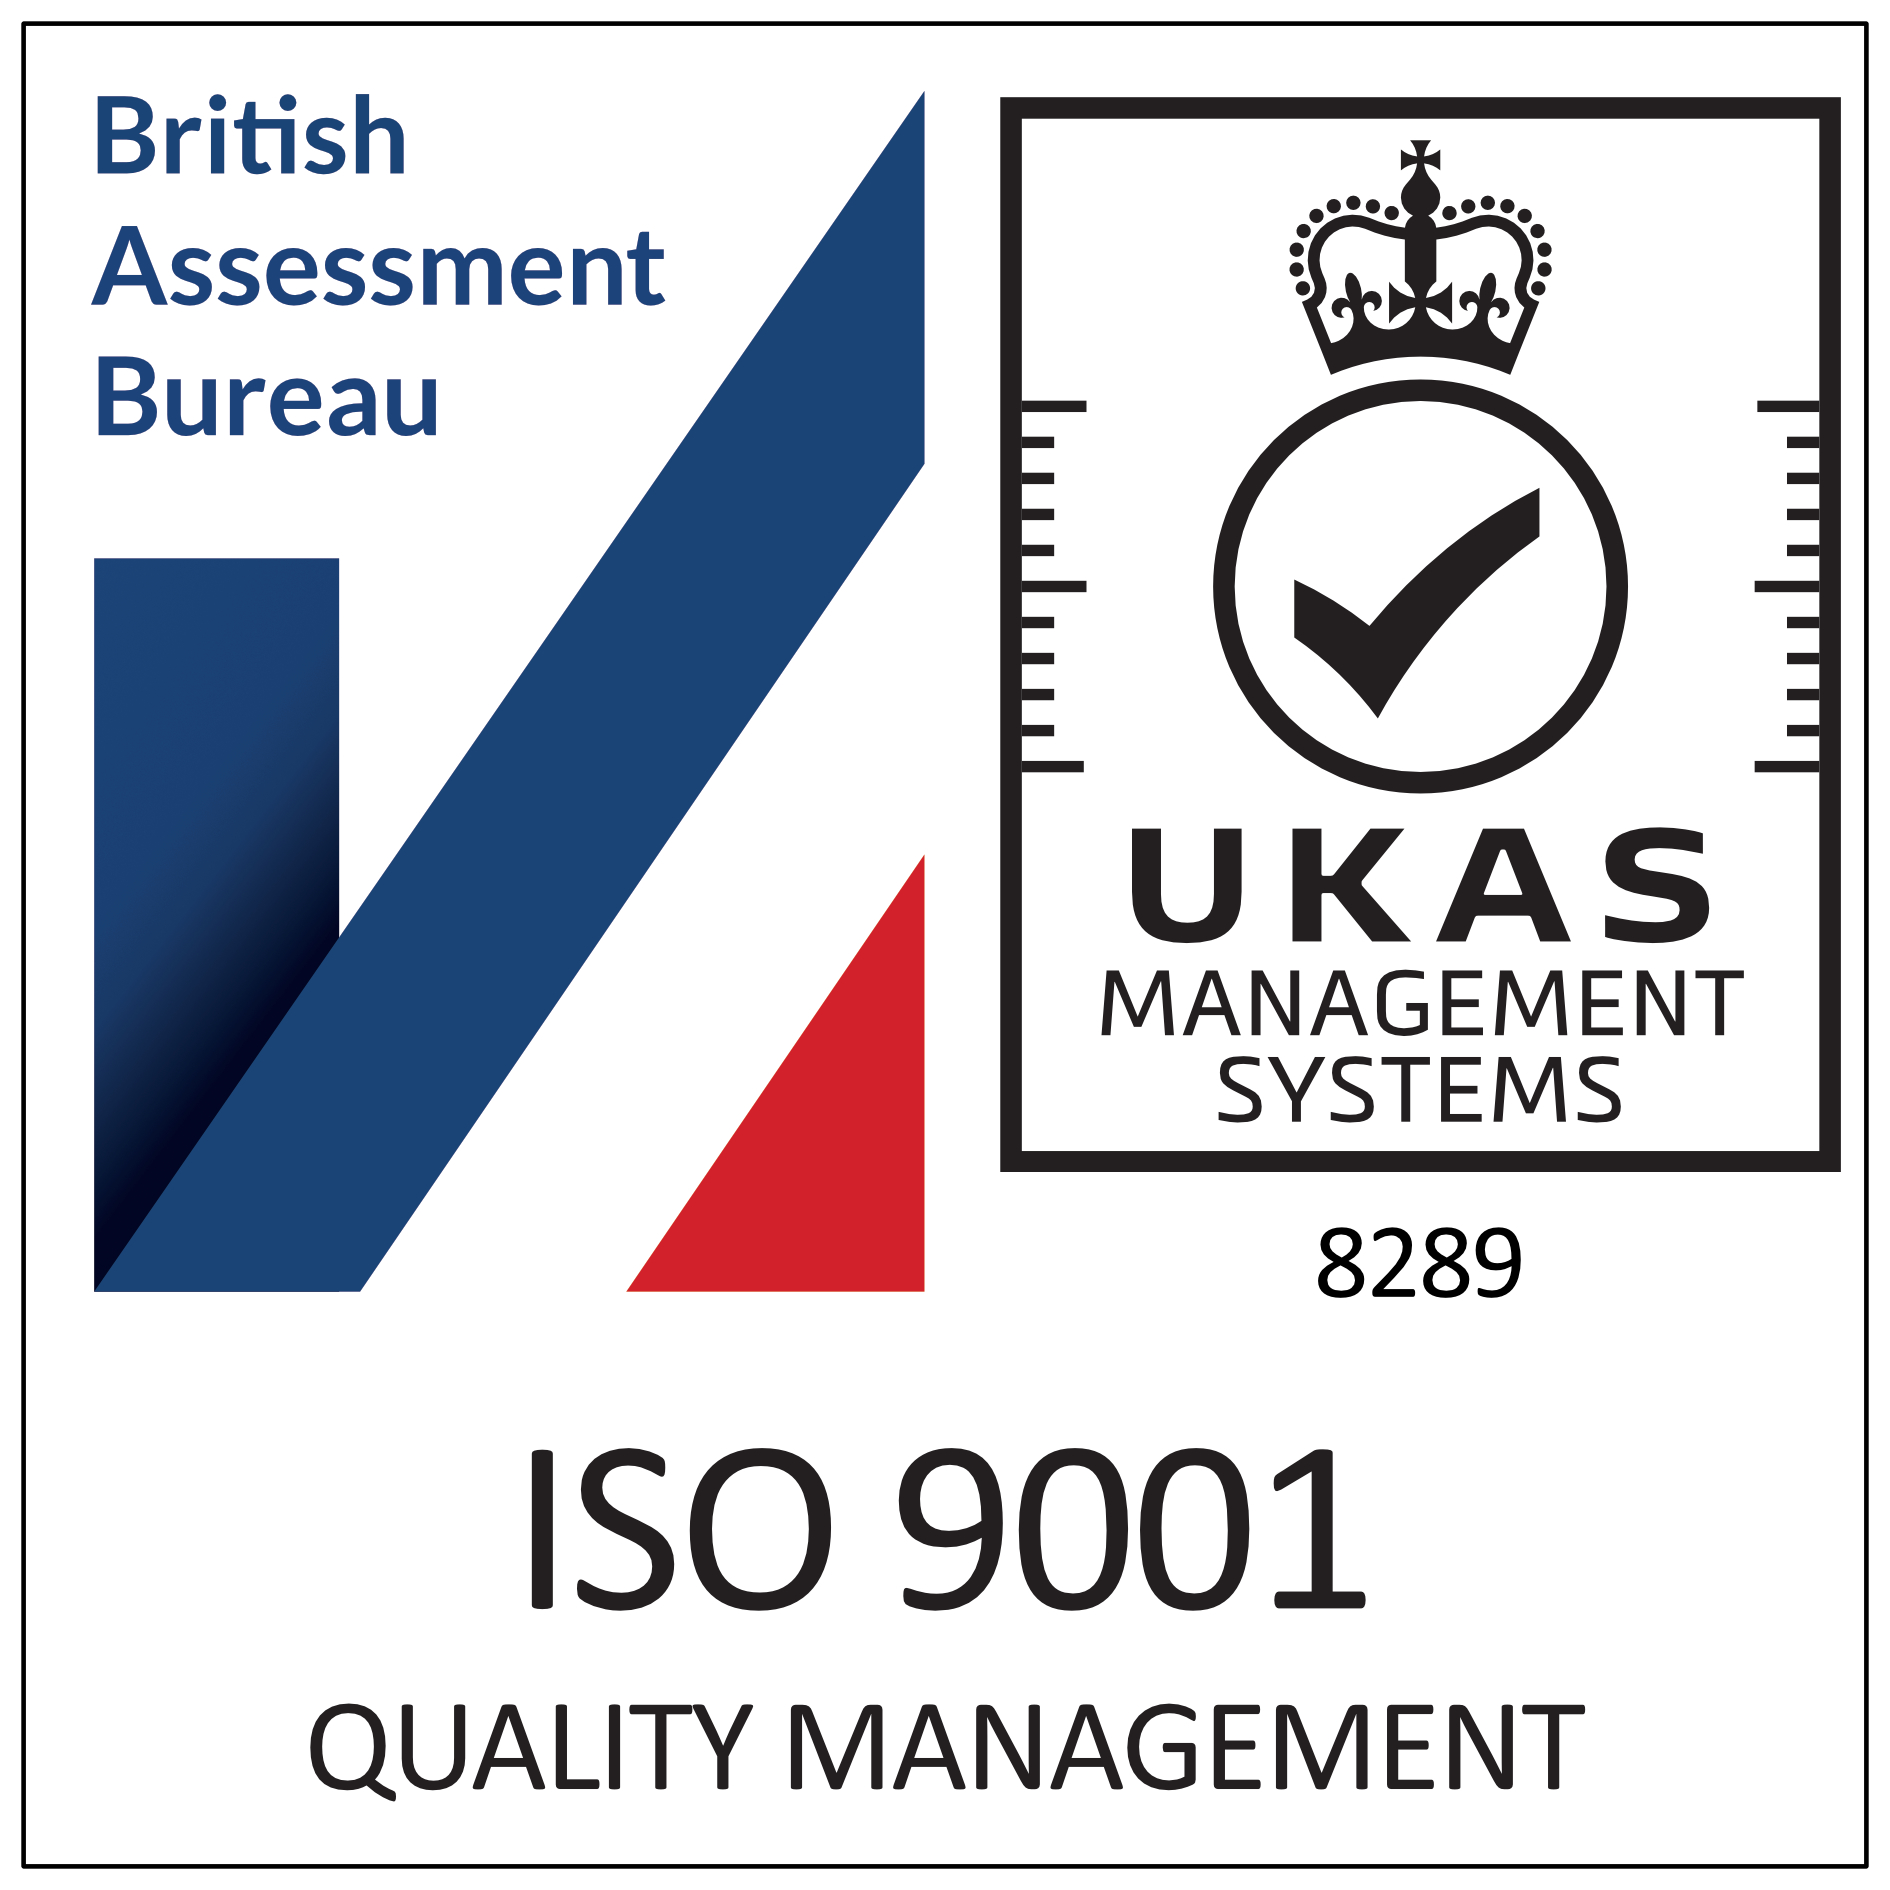 Cardiff, Wales, United KingdomのエージェンシーPlus Your BusinessはISO 9001 certified賞を獲得しています